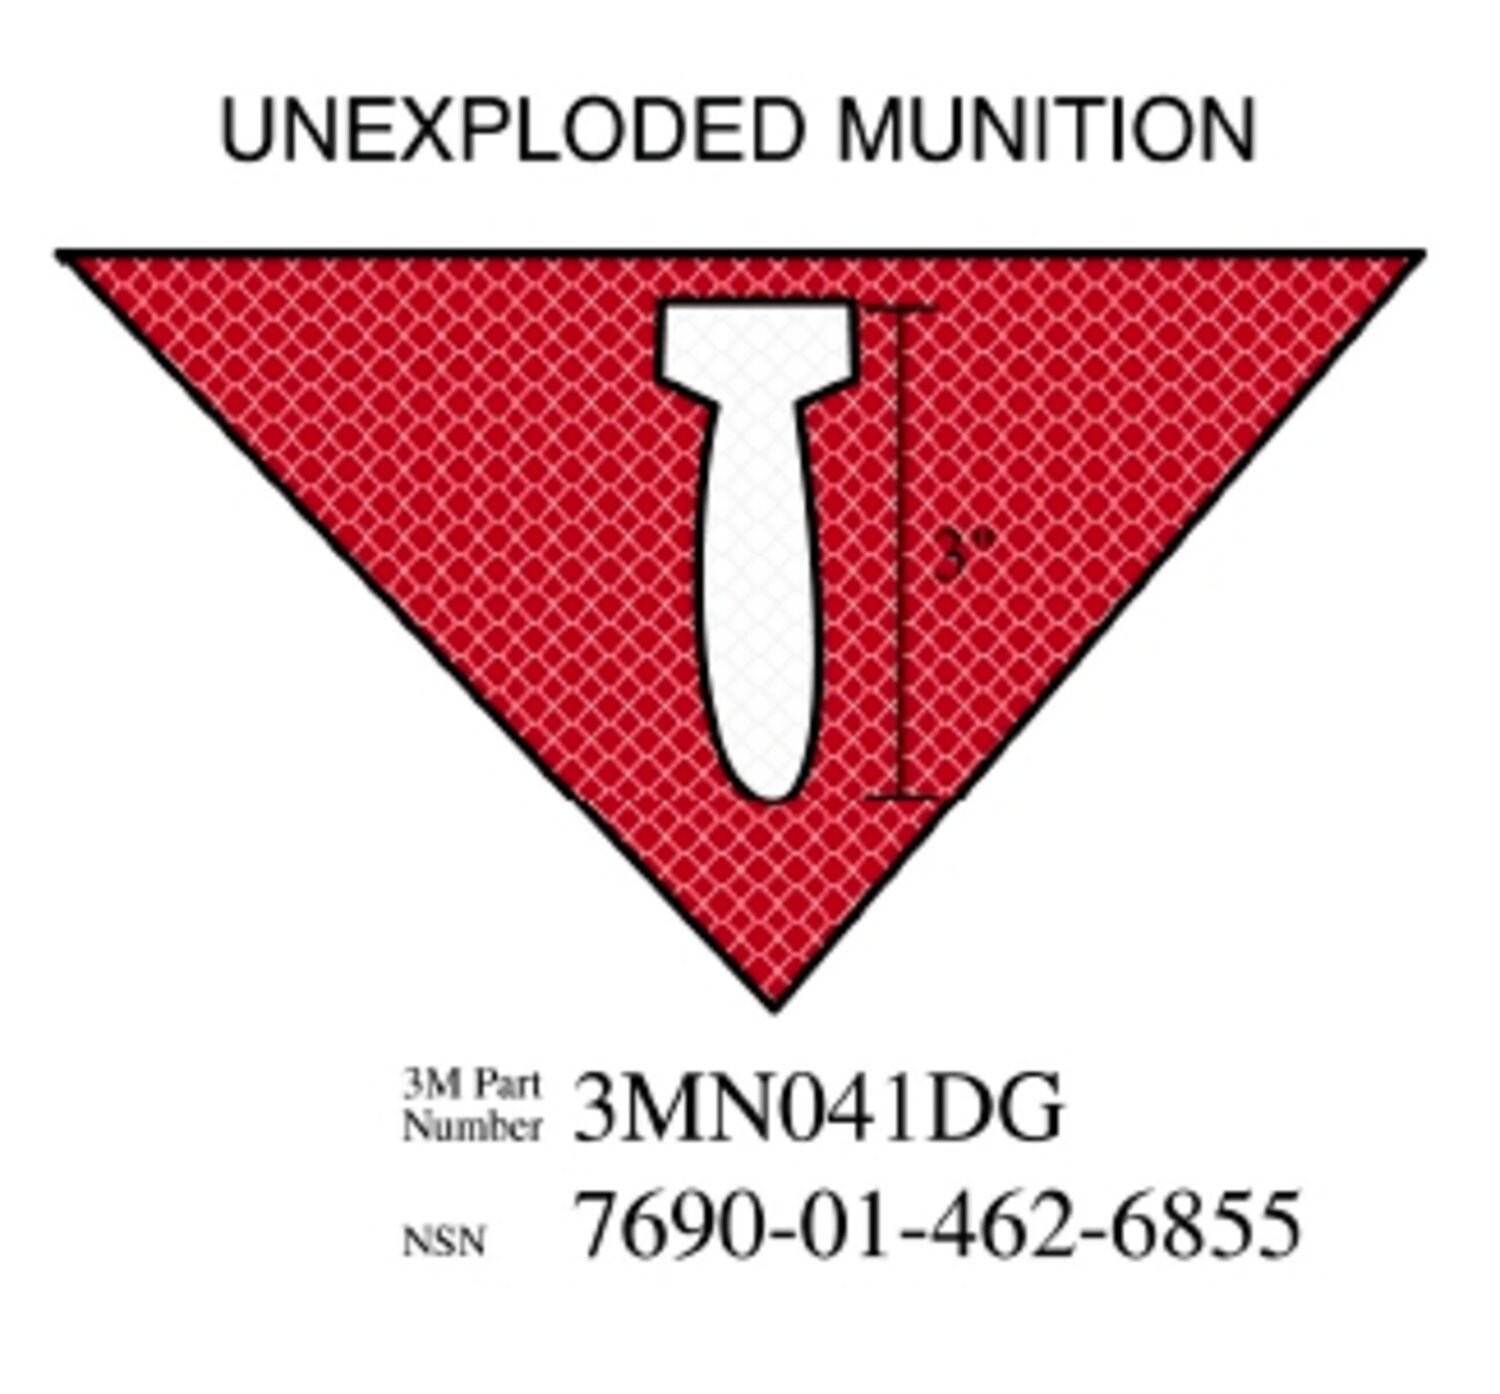 7010388682 - 3M Diamond Grade Damage Control Sign 3MN041DG, "UNEXP MUNI", 11.5 in x
8 in, 10/Package